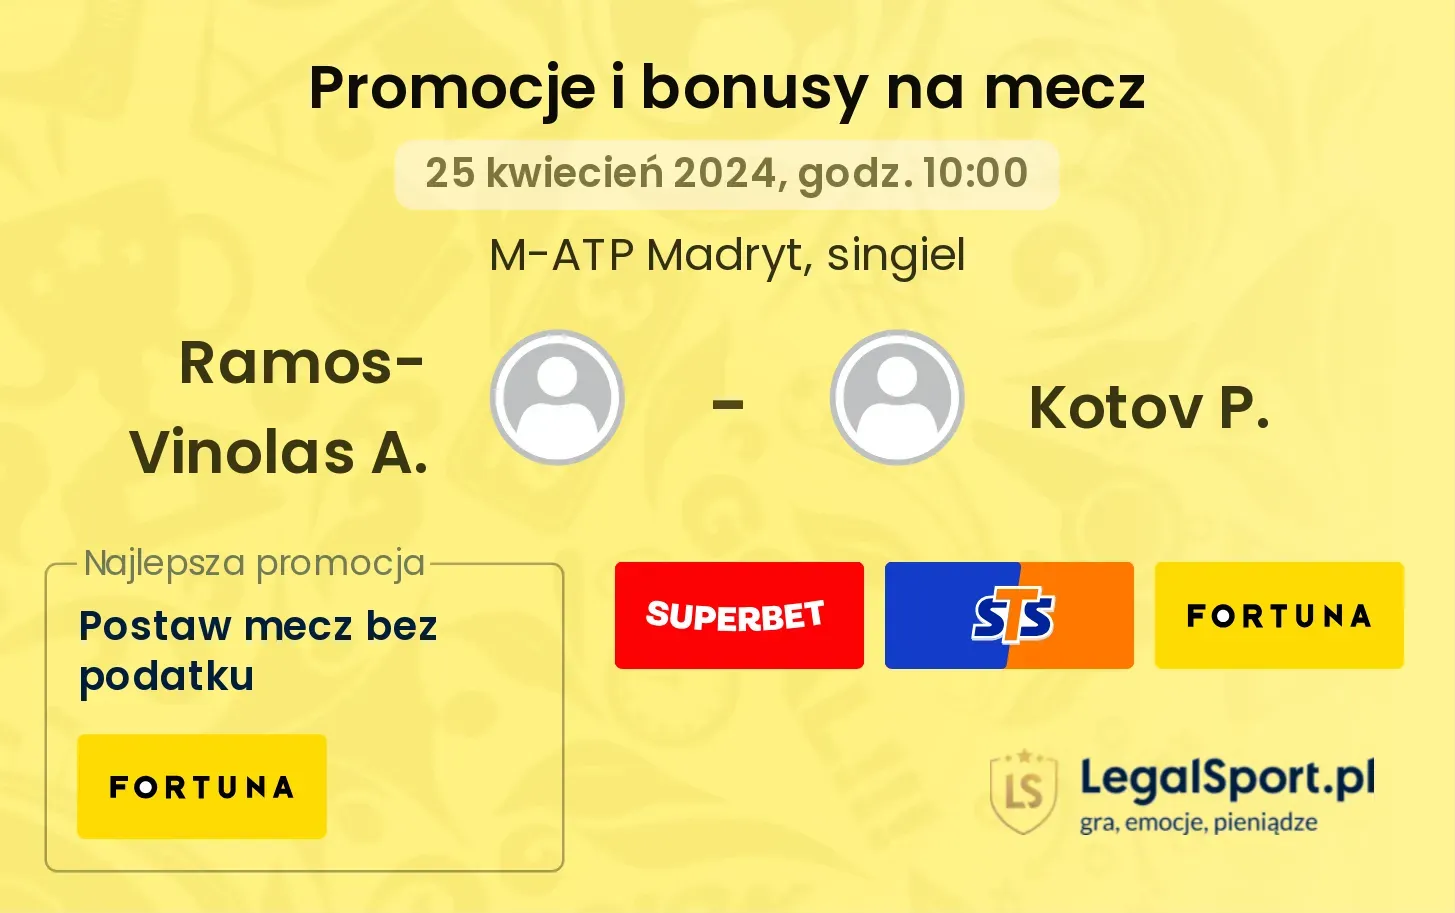 Ramos-Vinolas A. - Kotov P. promocje bonusy na mecz